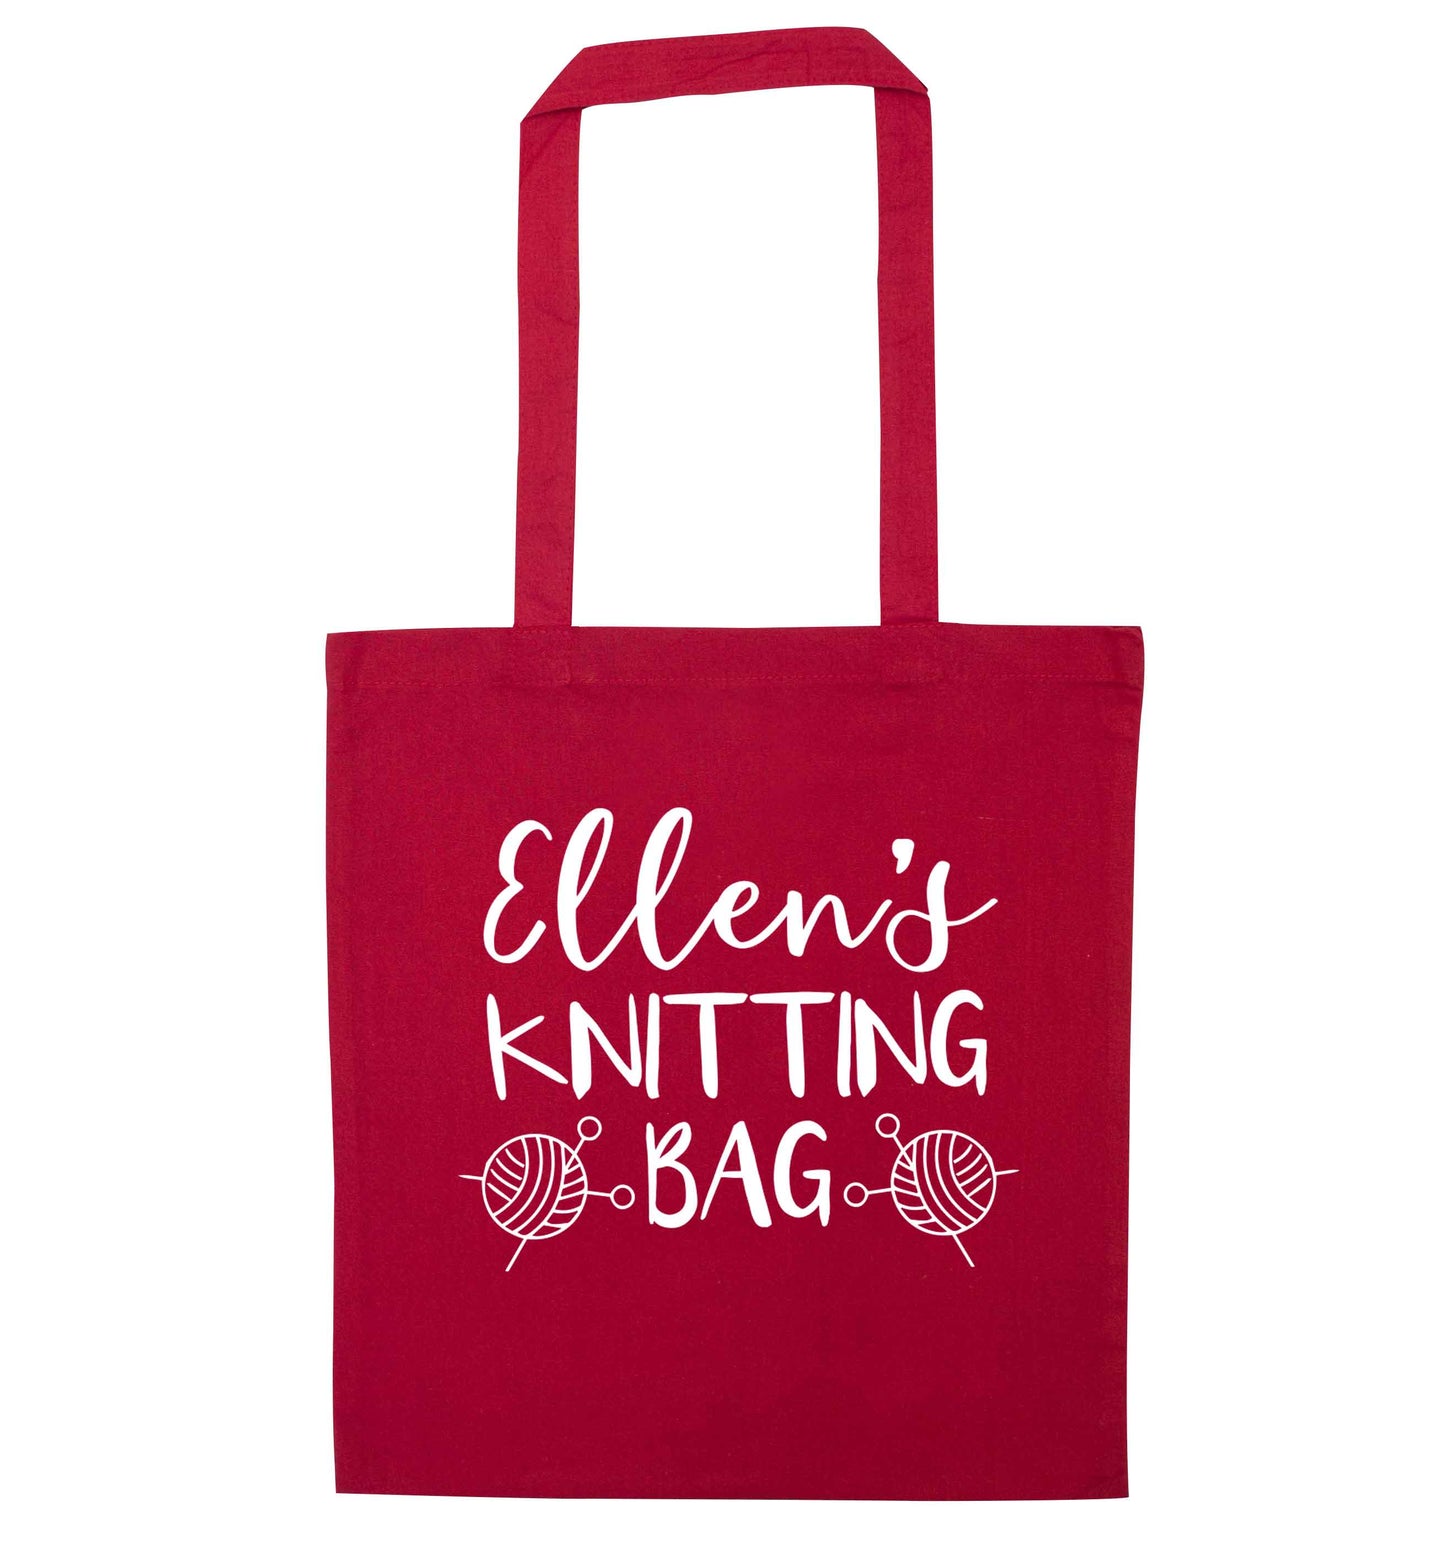 Personalised knitting bag red tote bag